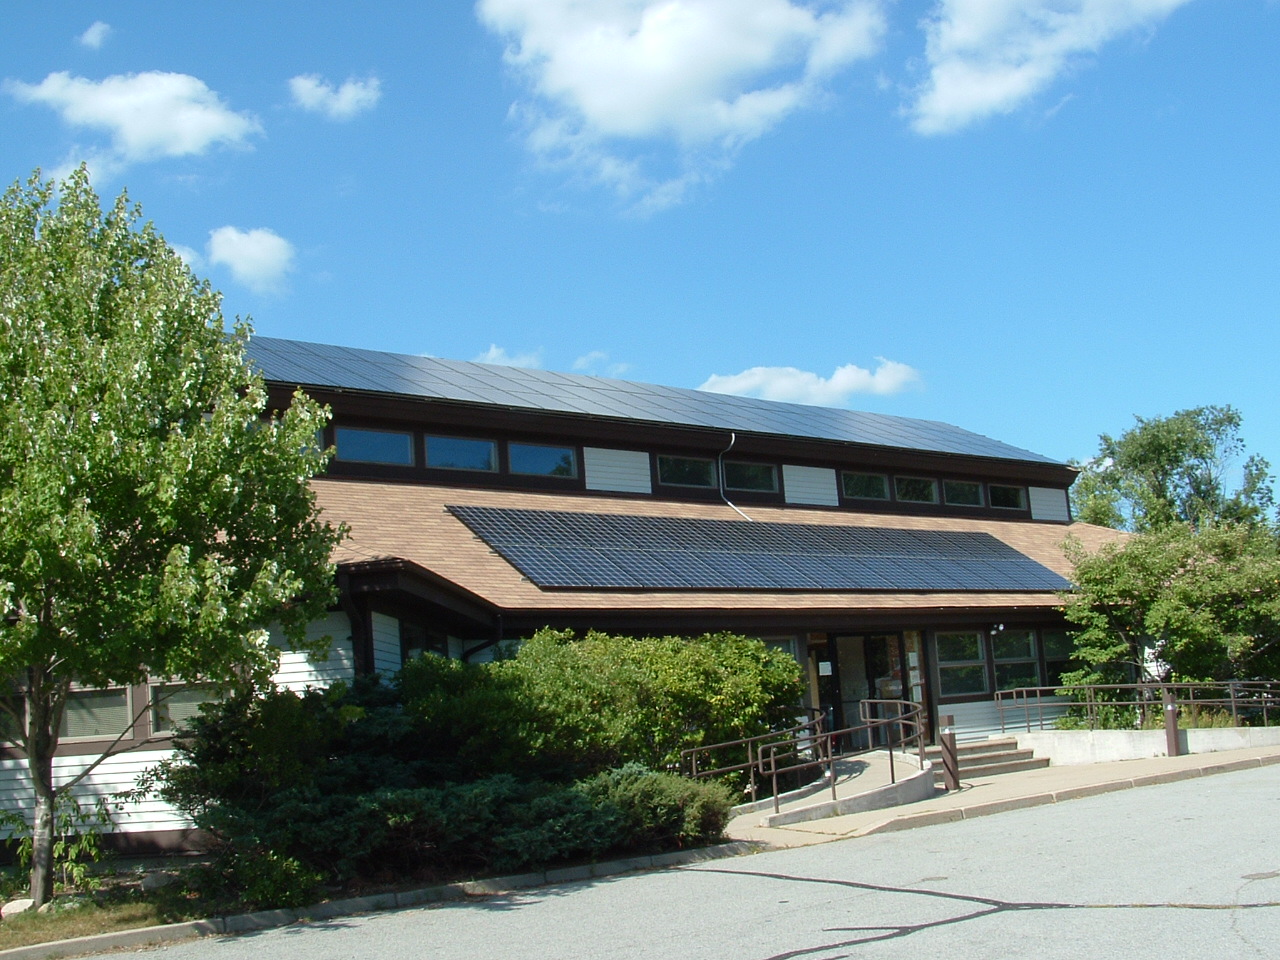 Audubon Society of Rhode Island Headquarters Office